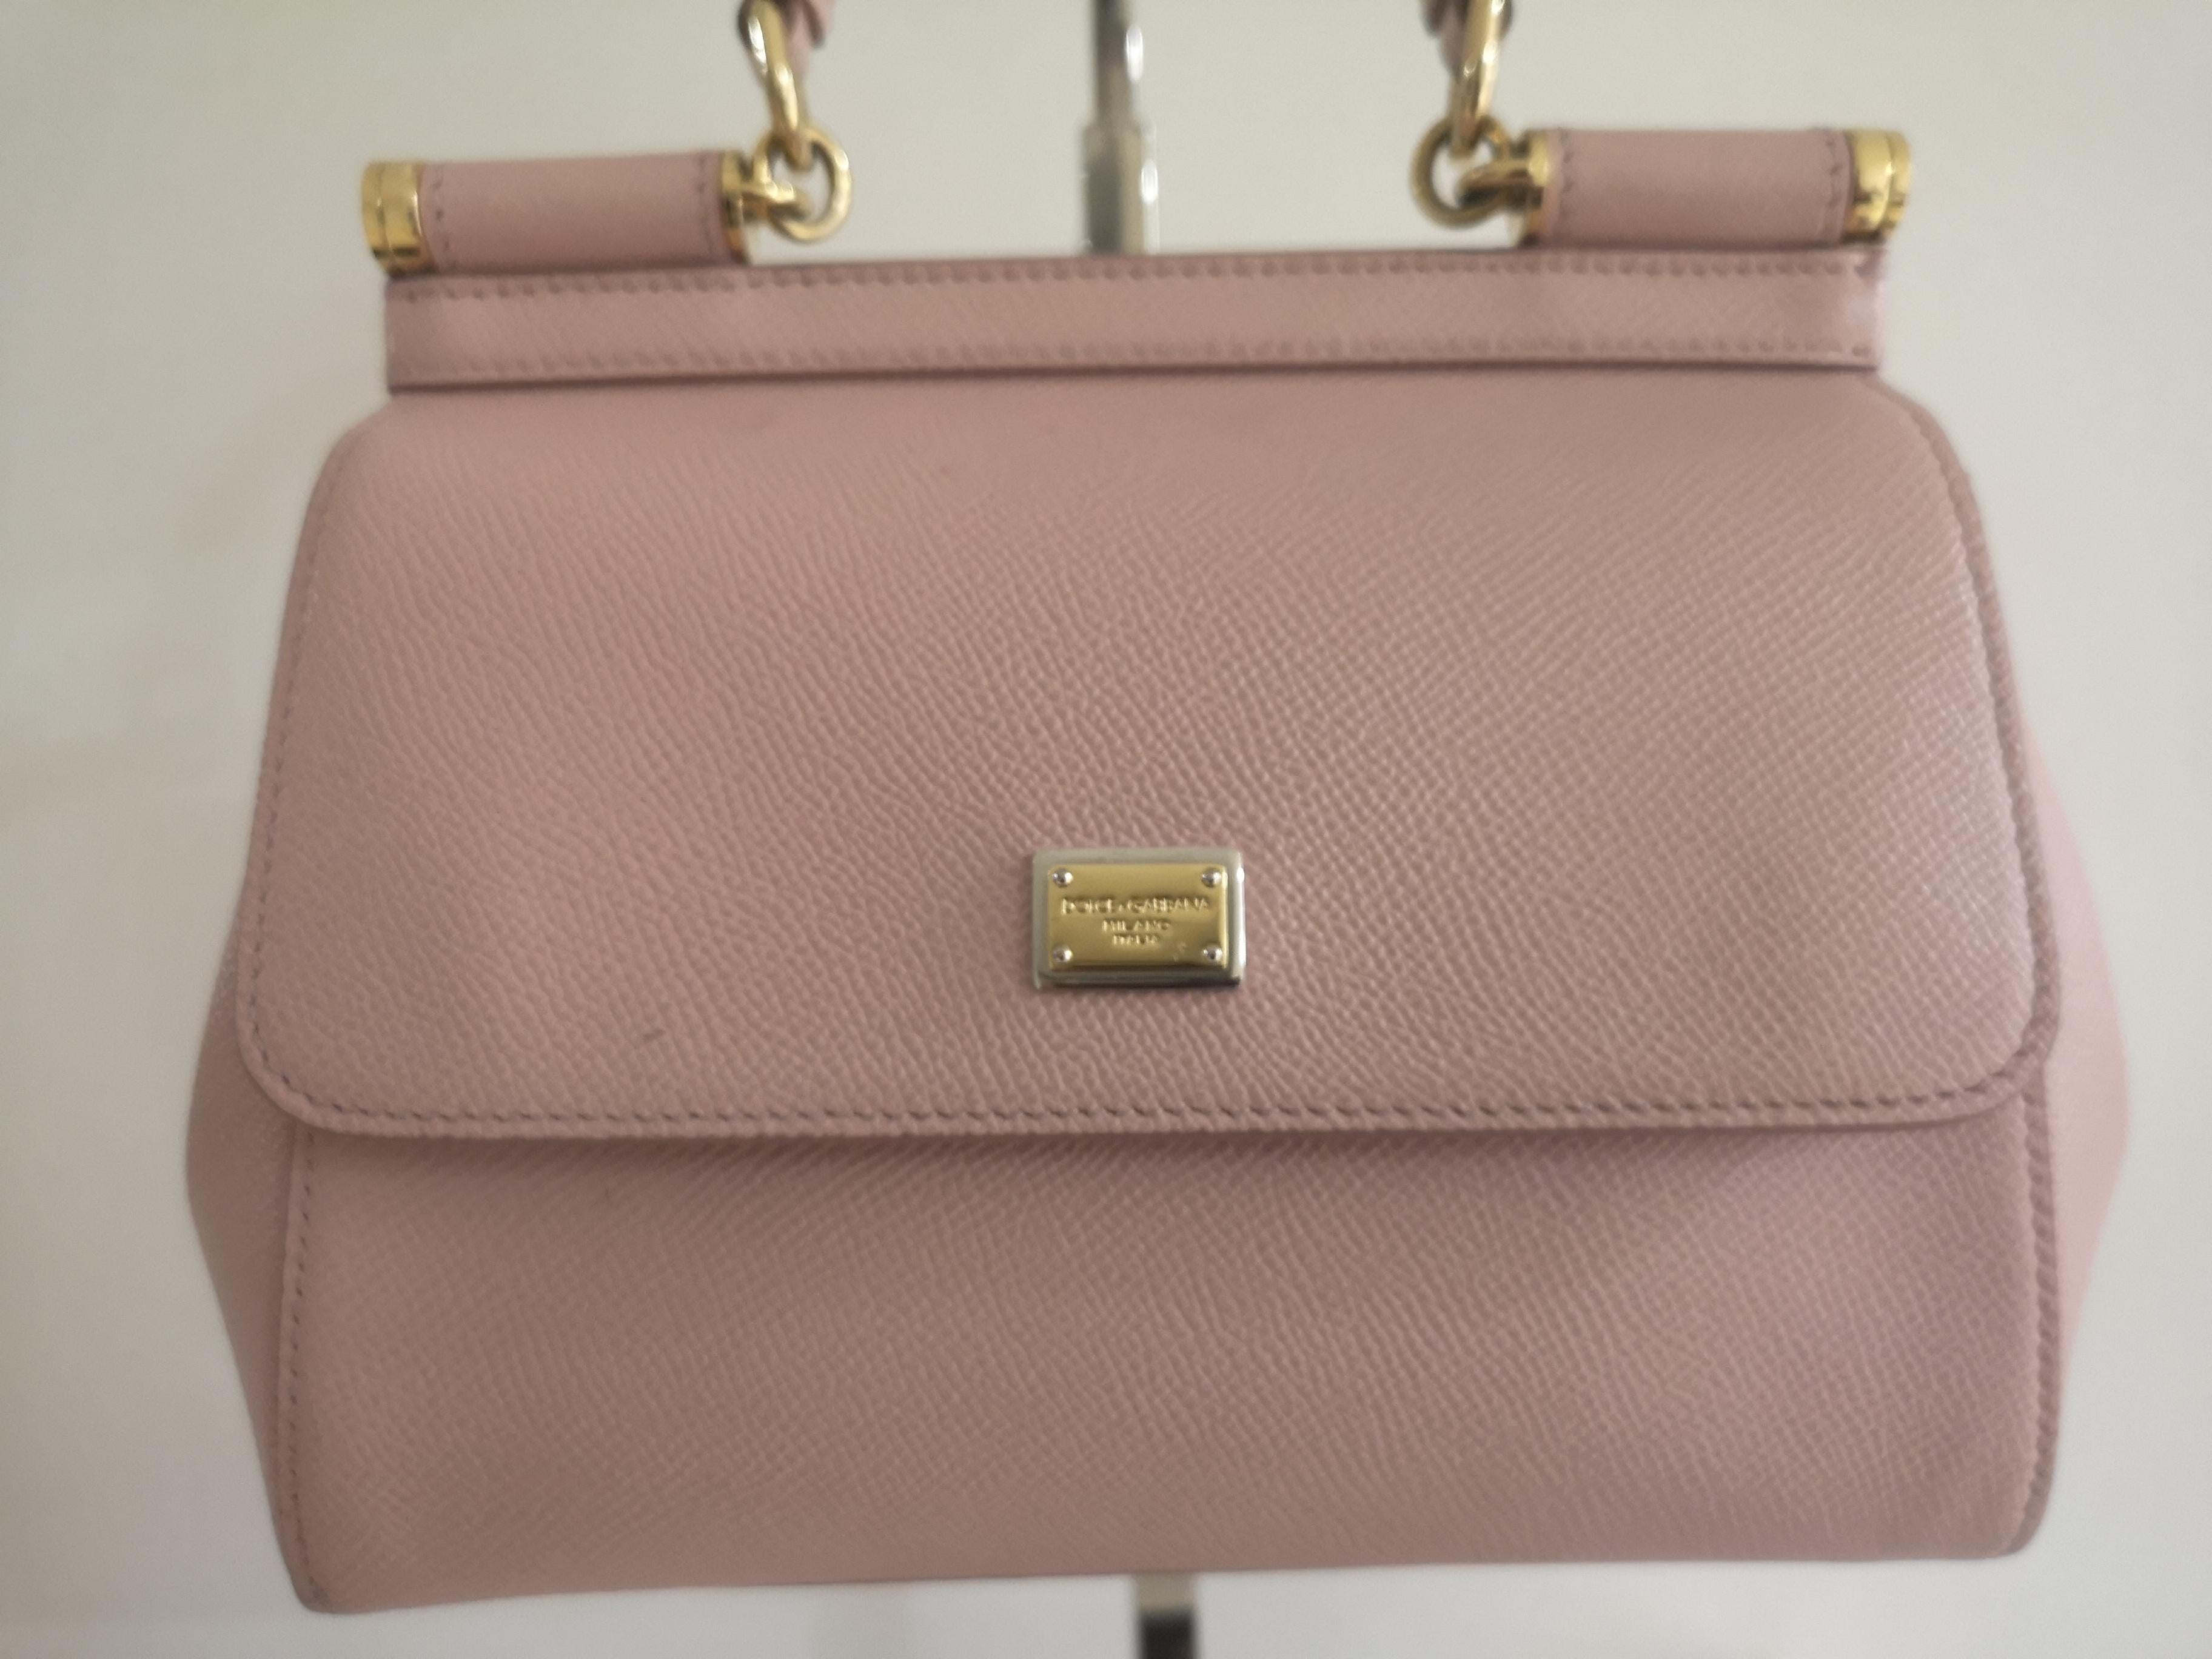 Dolce & Gabbana Small Sicily Nude light pink leather shoulder bag 3